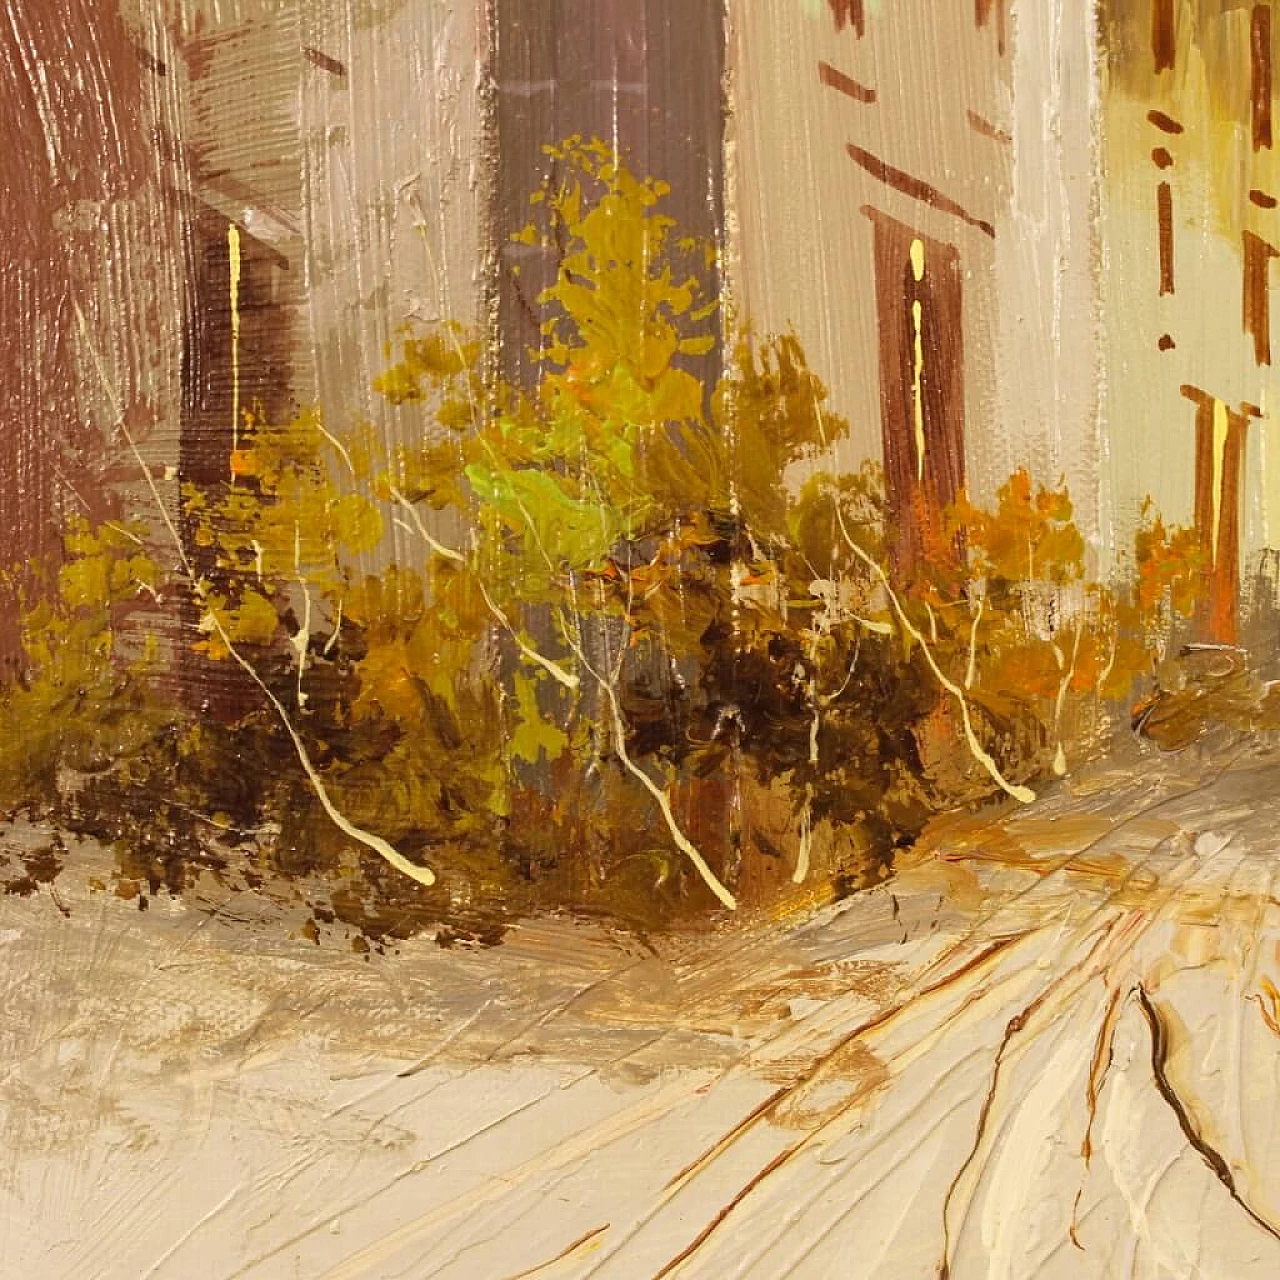 Veduta urbana in stile Impressionista, tecnica mista su tela 11